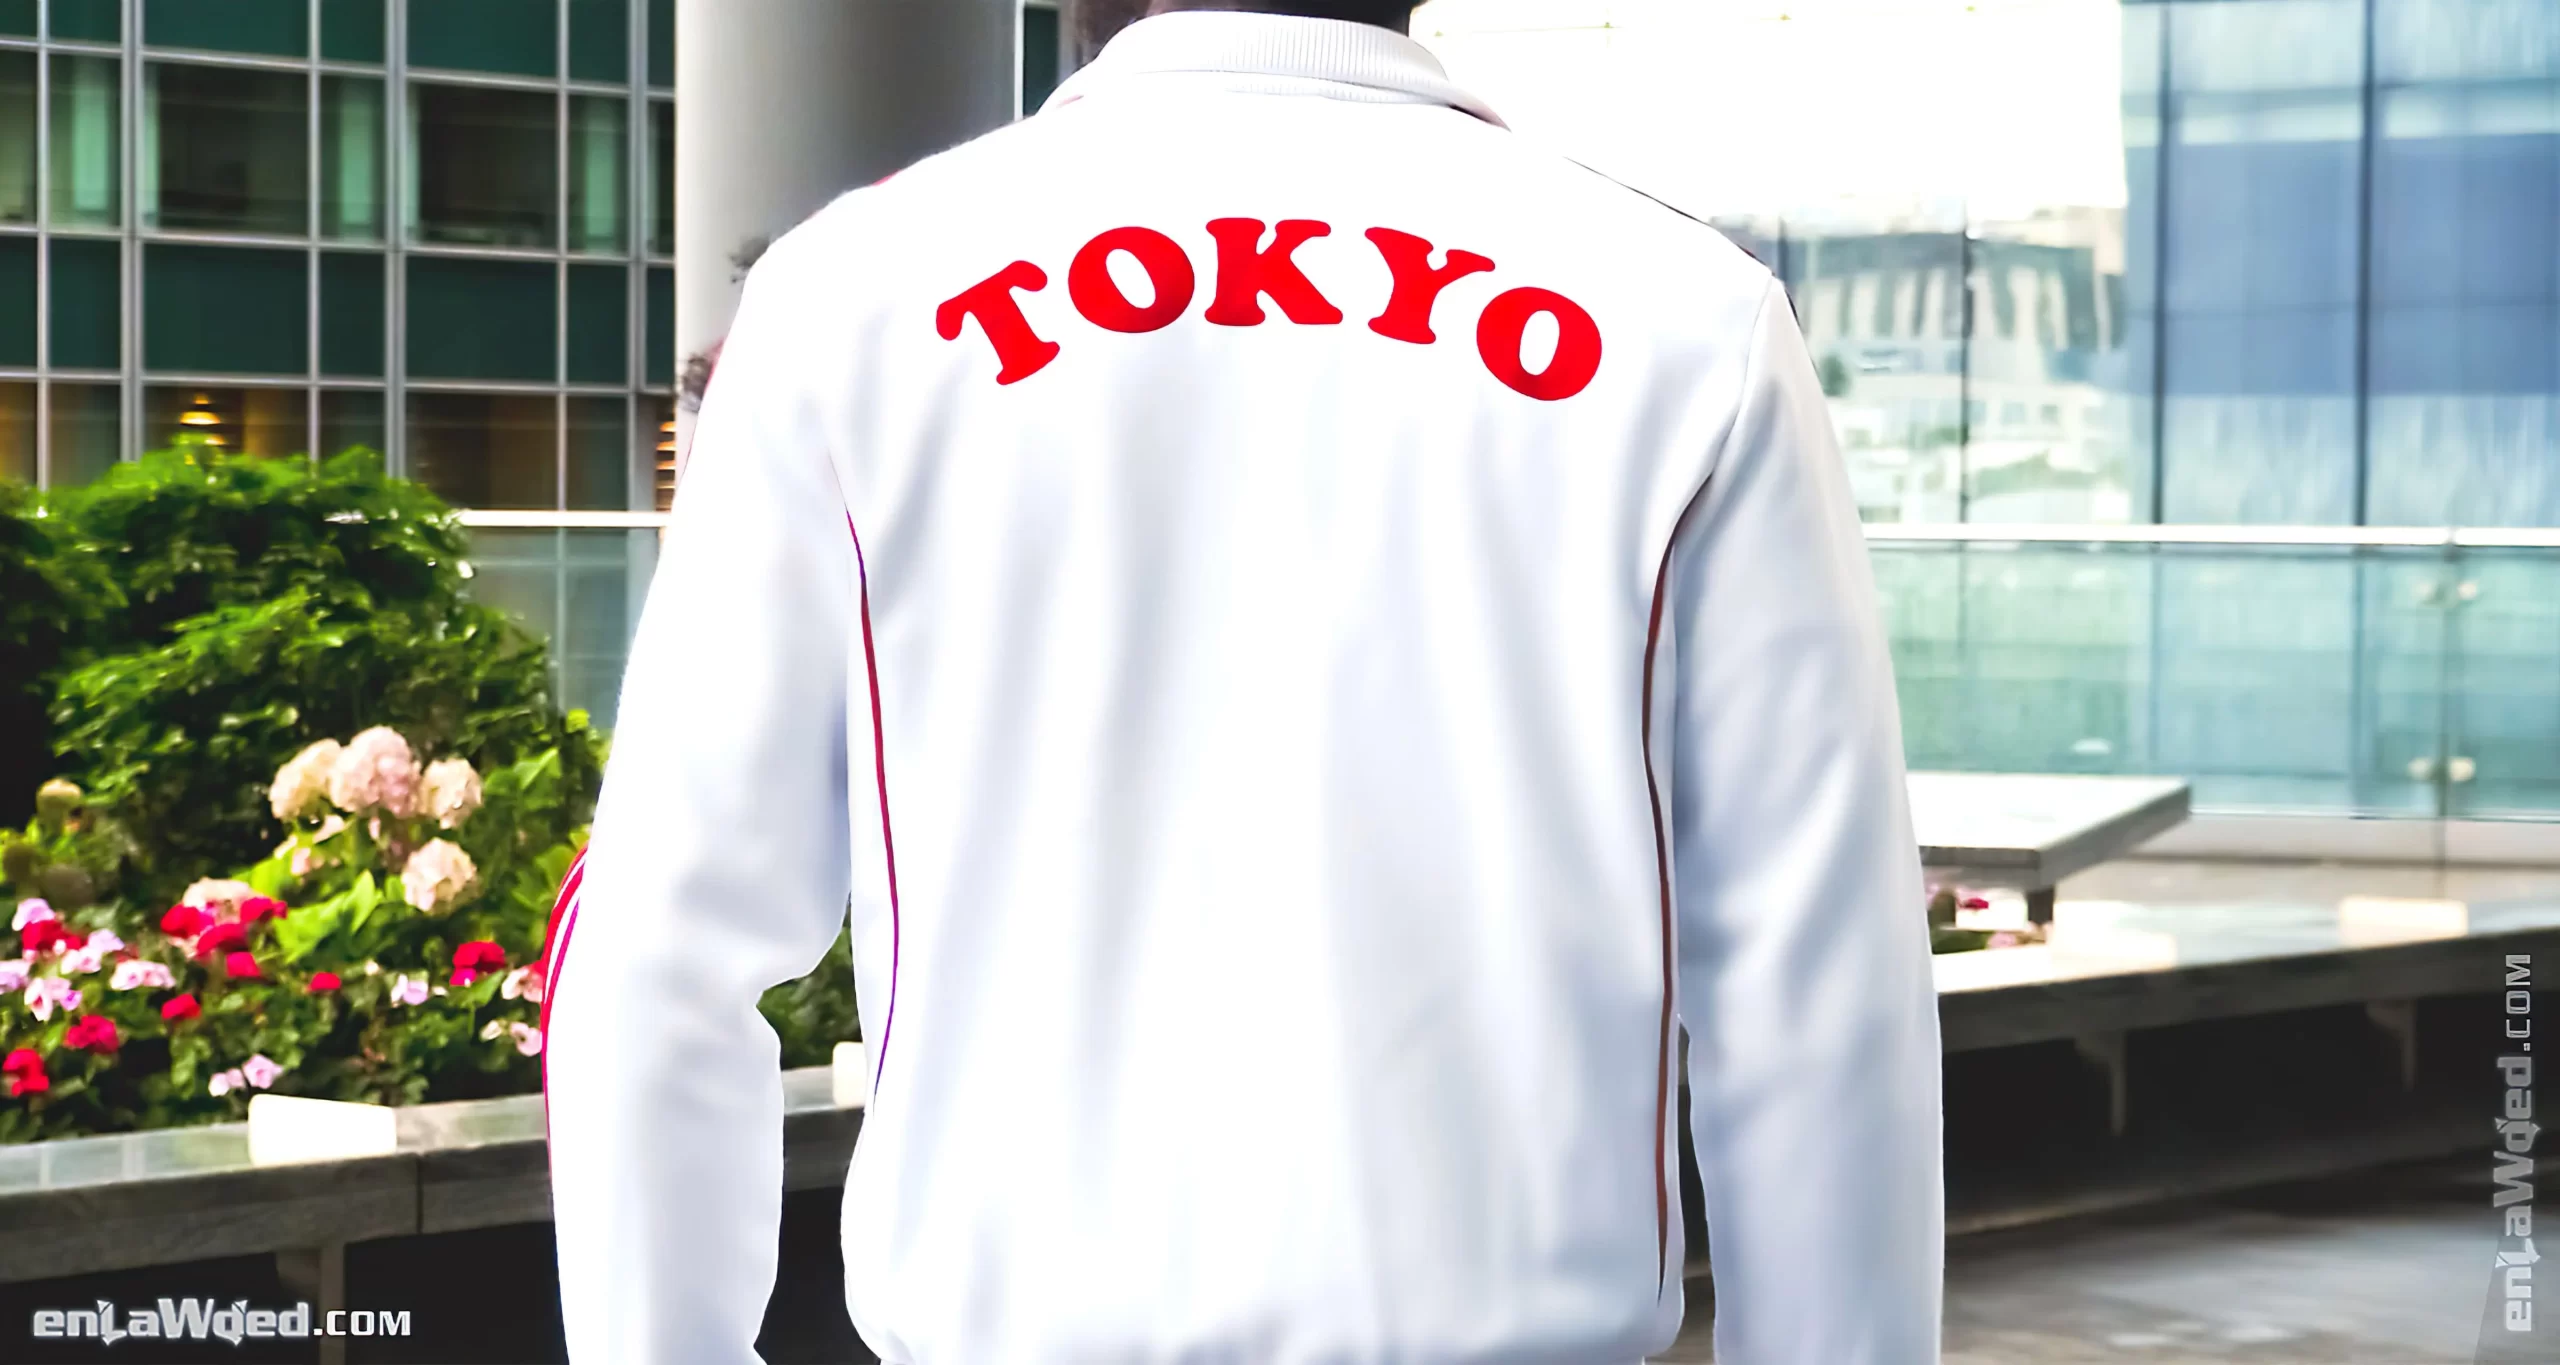 Men’s 2006 Tokyo TT-Two by Adidas Originals: Dazzling (EnLawded.com file #lmchk90118ip2y121910kg9st)